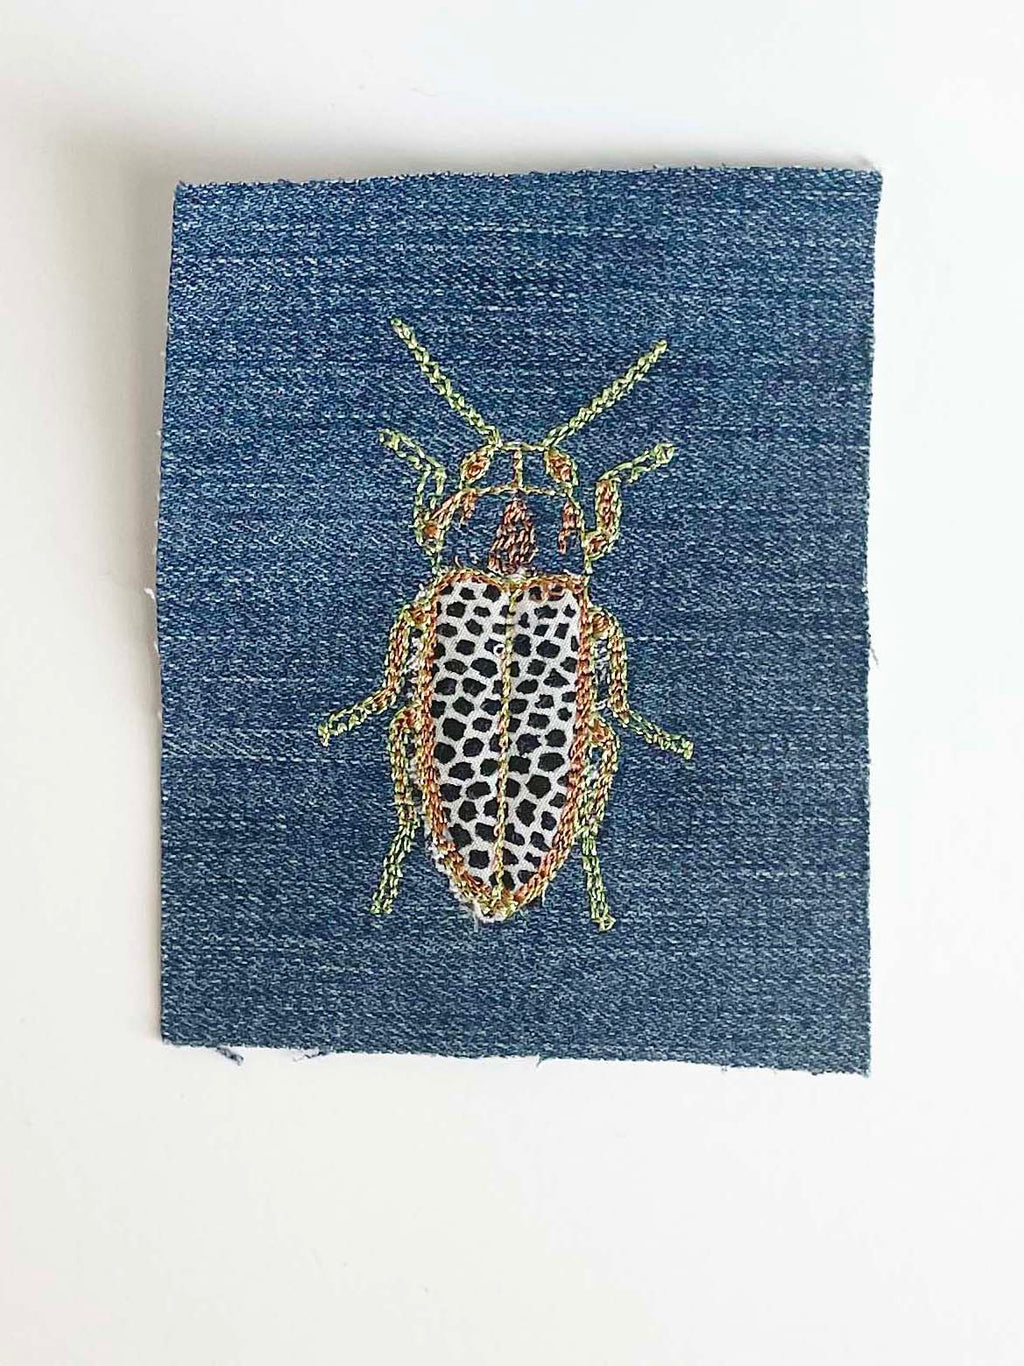 Machine embroidered beetle on denim swatch. 